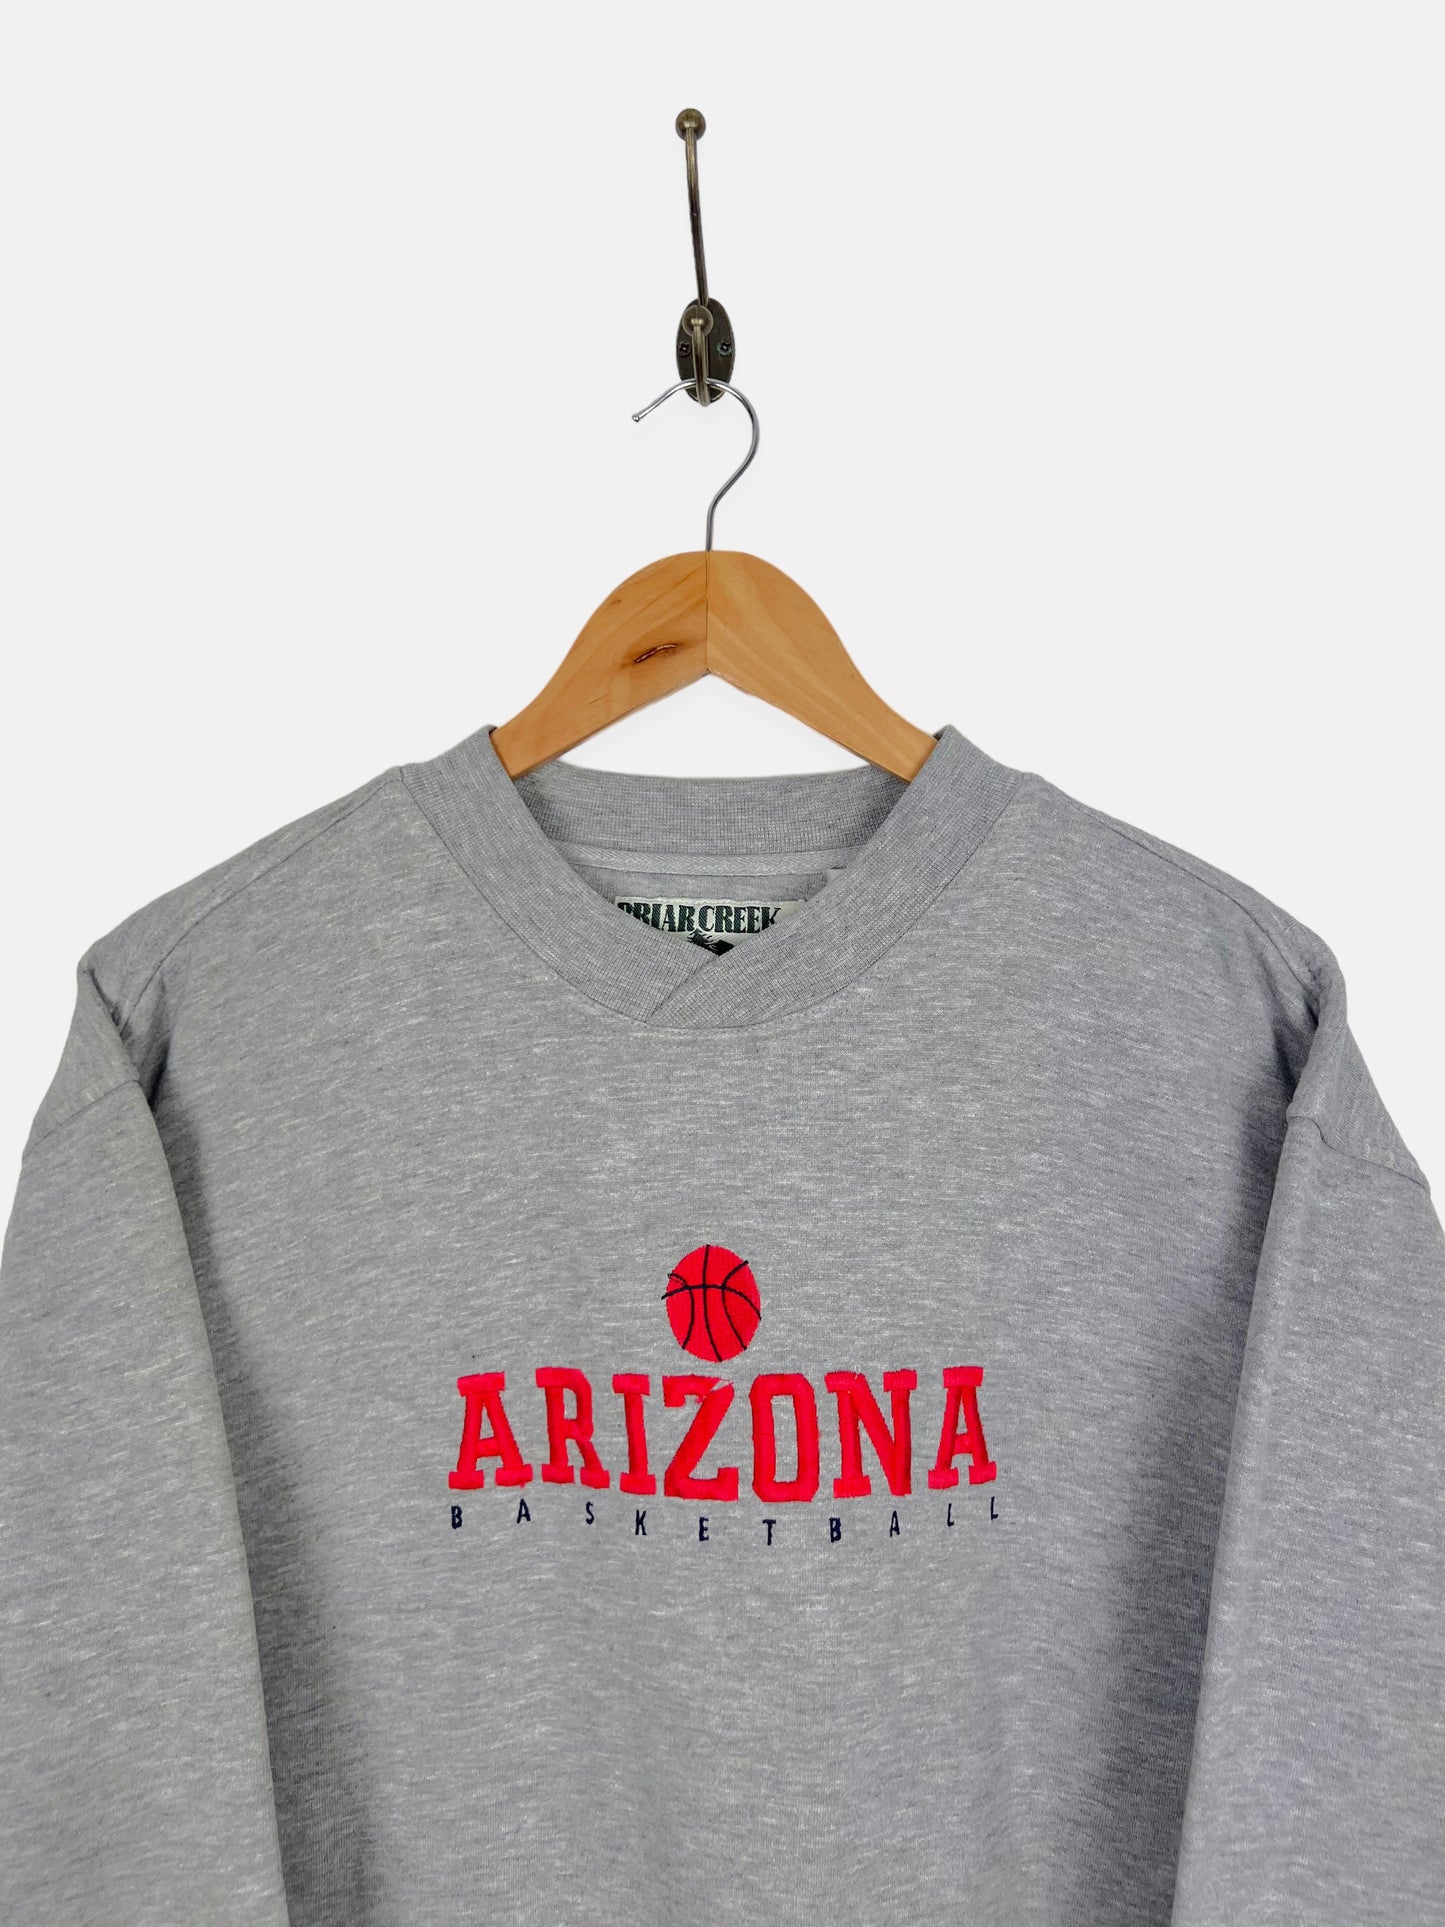 90's Arizona Basketball Embroidered Vintage Sweatshirt Size 10